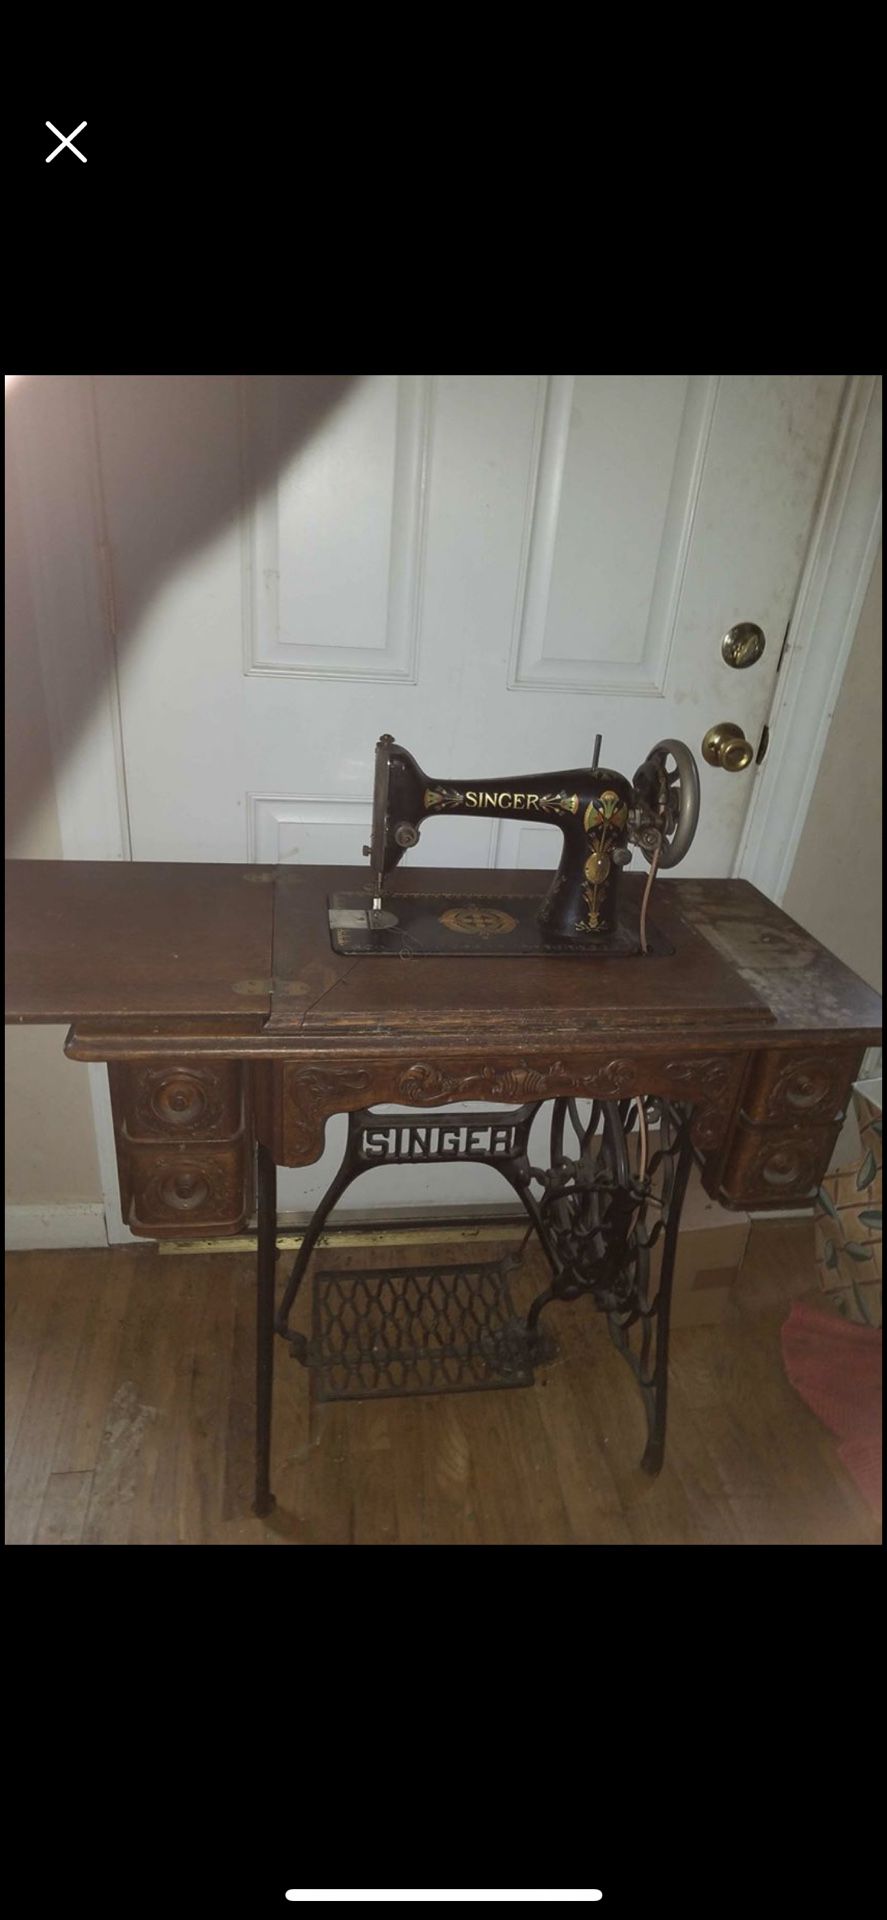 Singer treadle base sewing machine